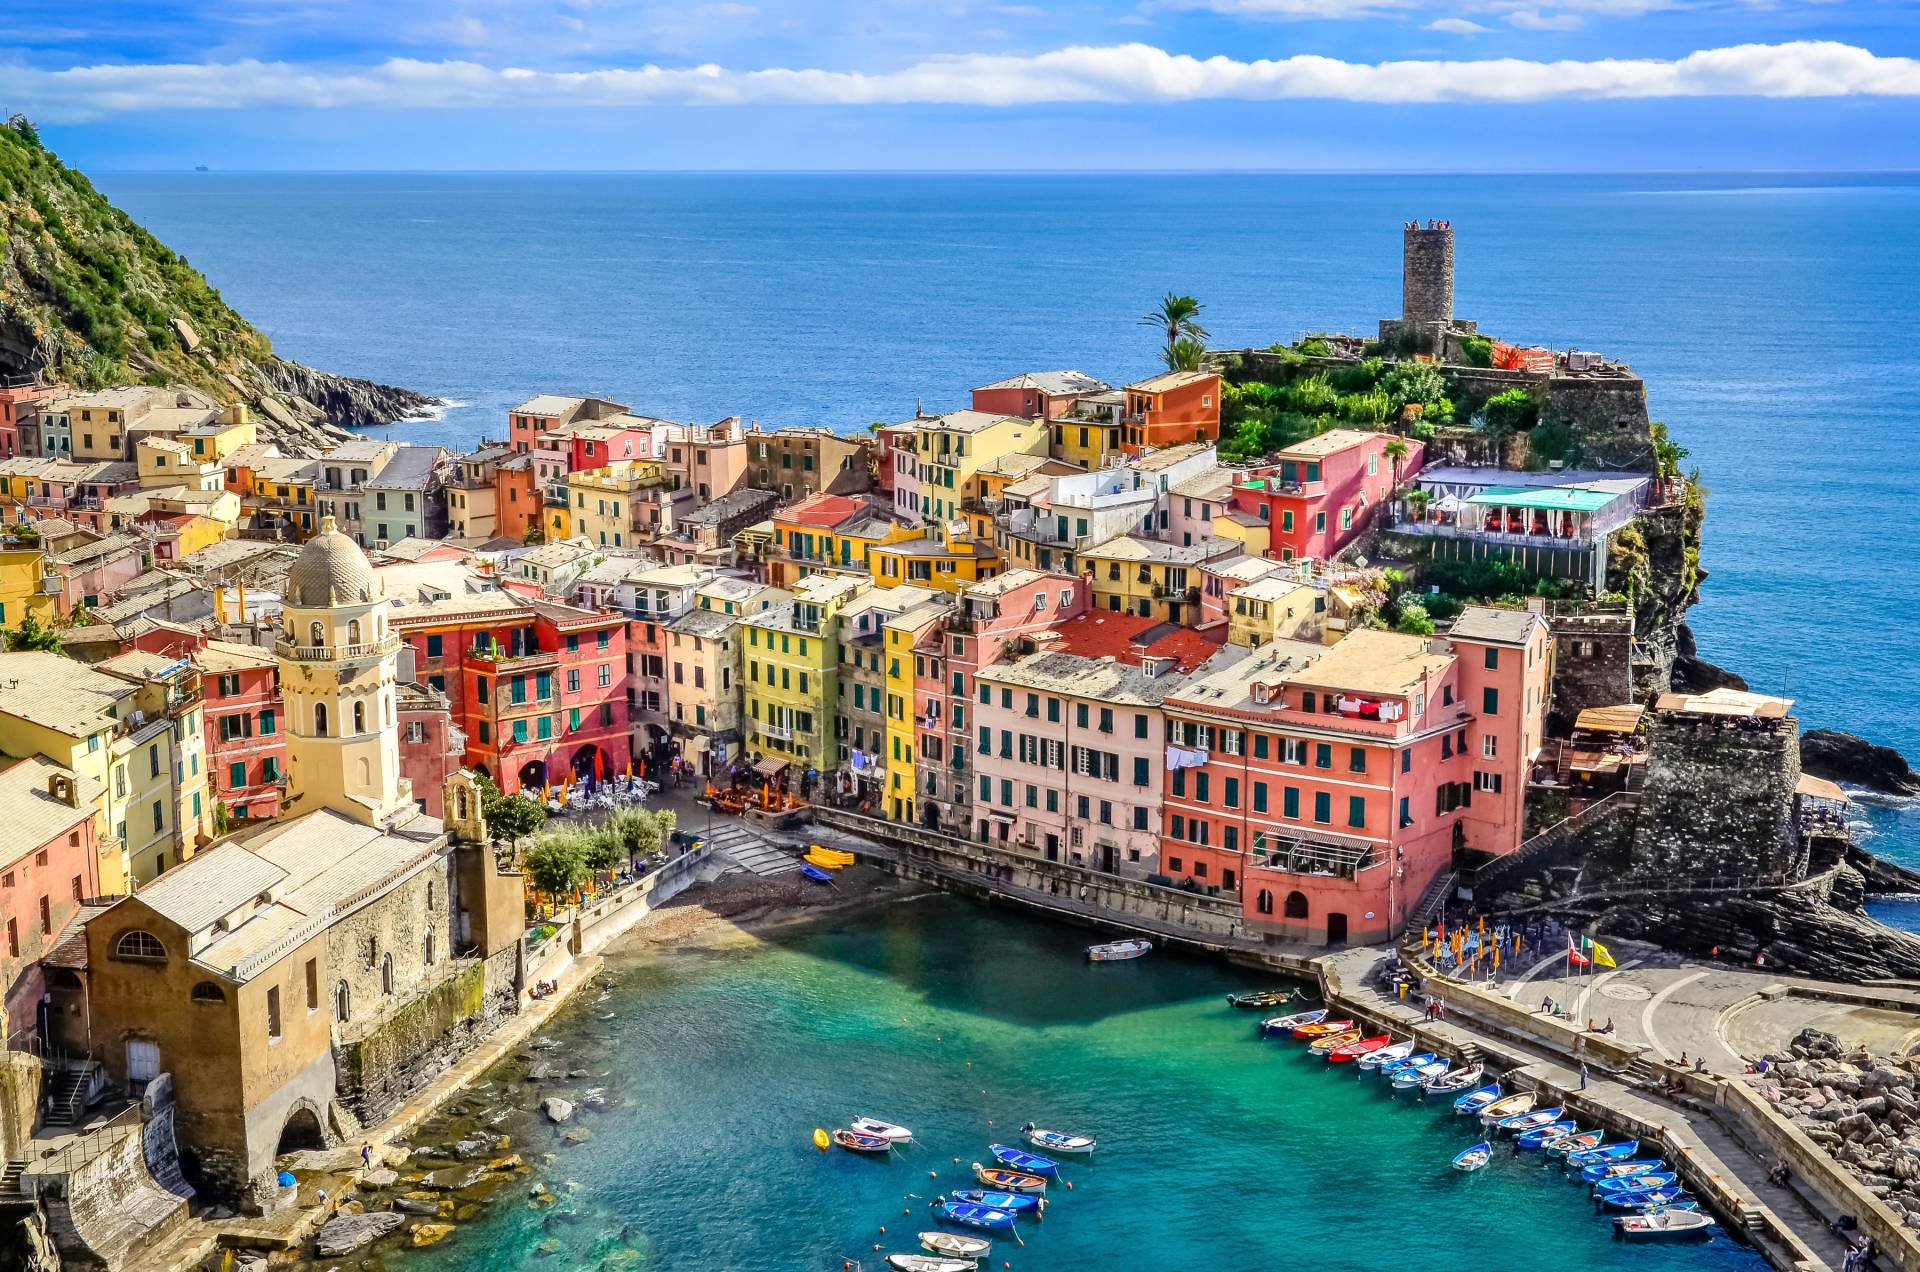 Papermoon Fototapete "Colorful Village Vernazza, Cinque Terre" von Papermoon